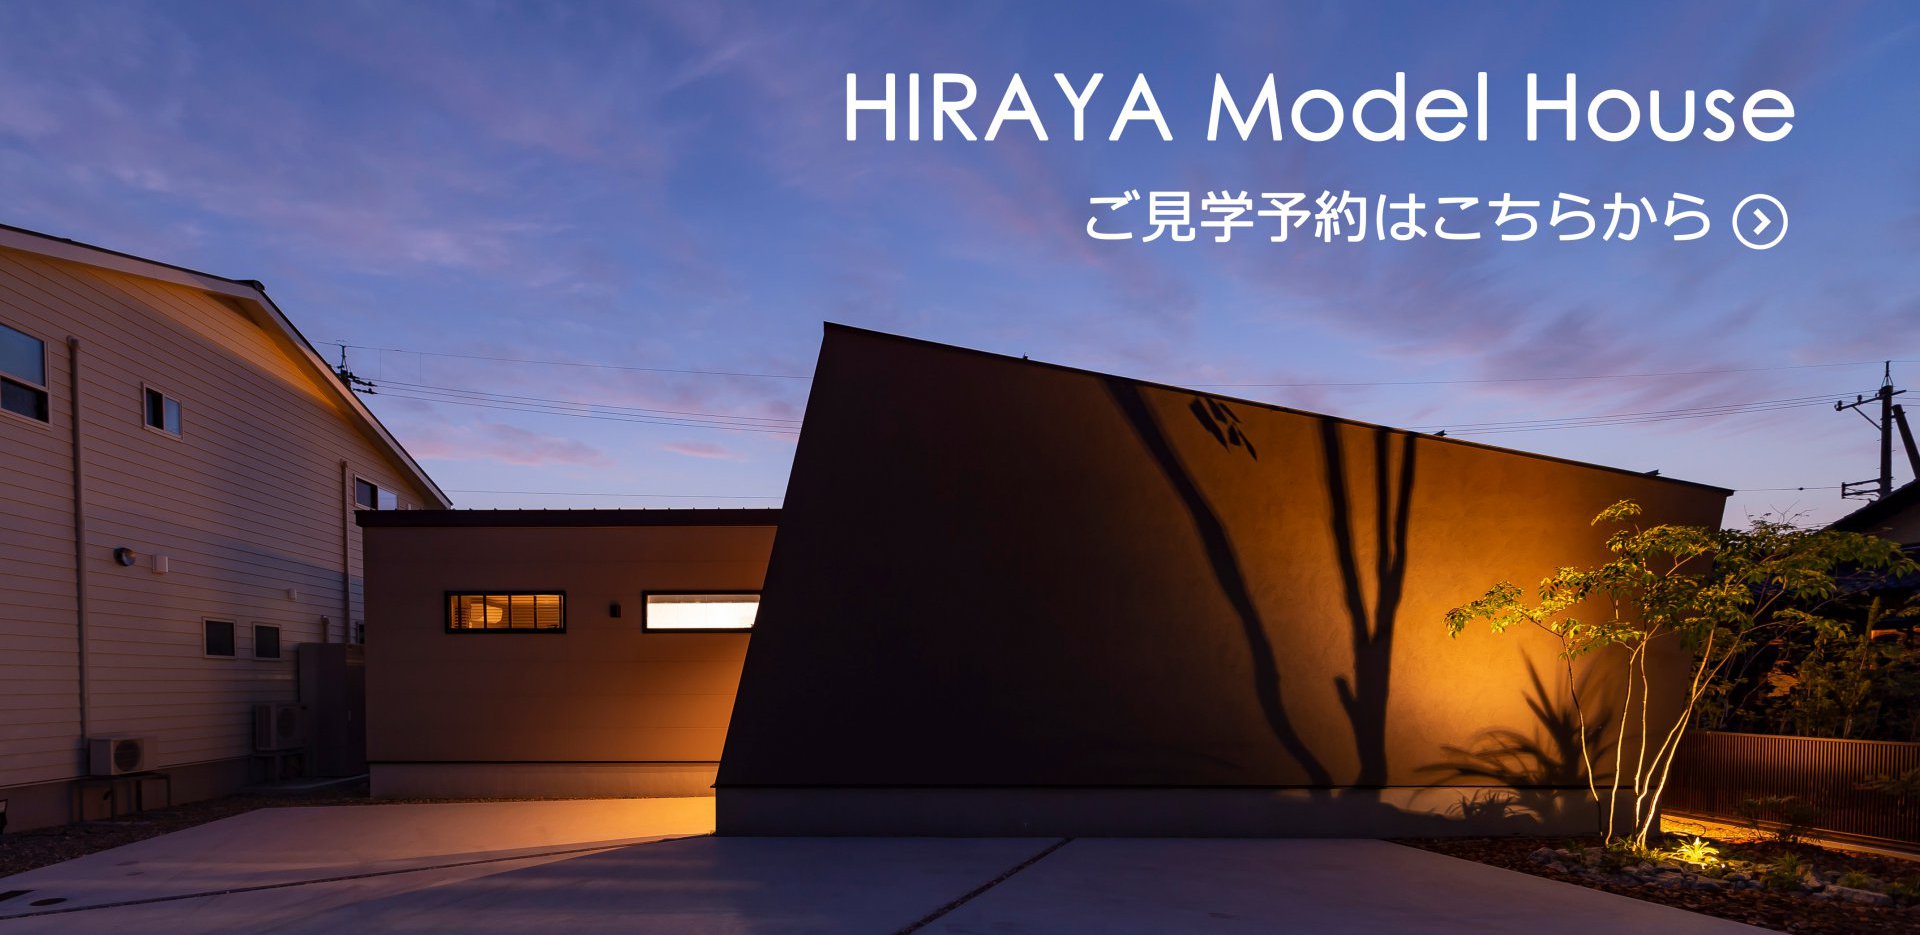 HIRAYA MODELHOUSE GRAND OPEN